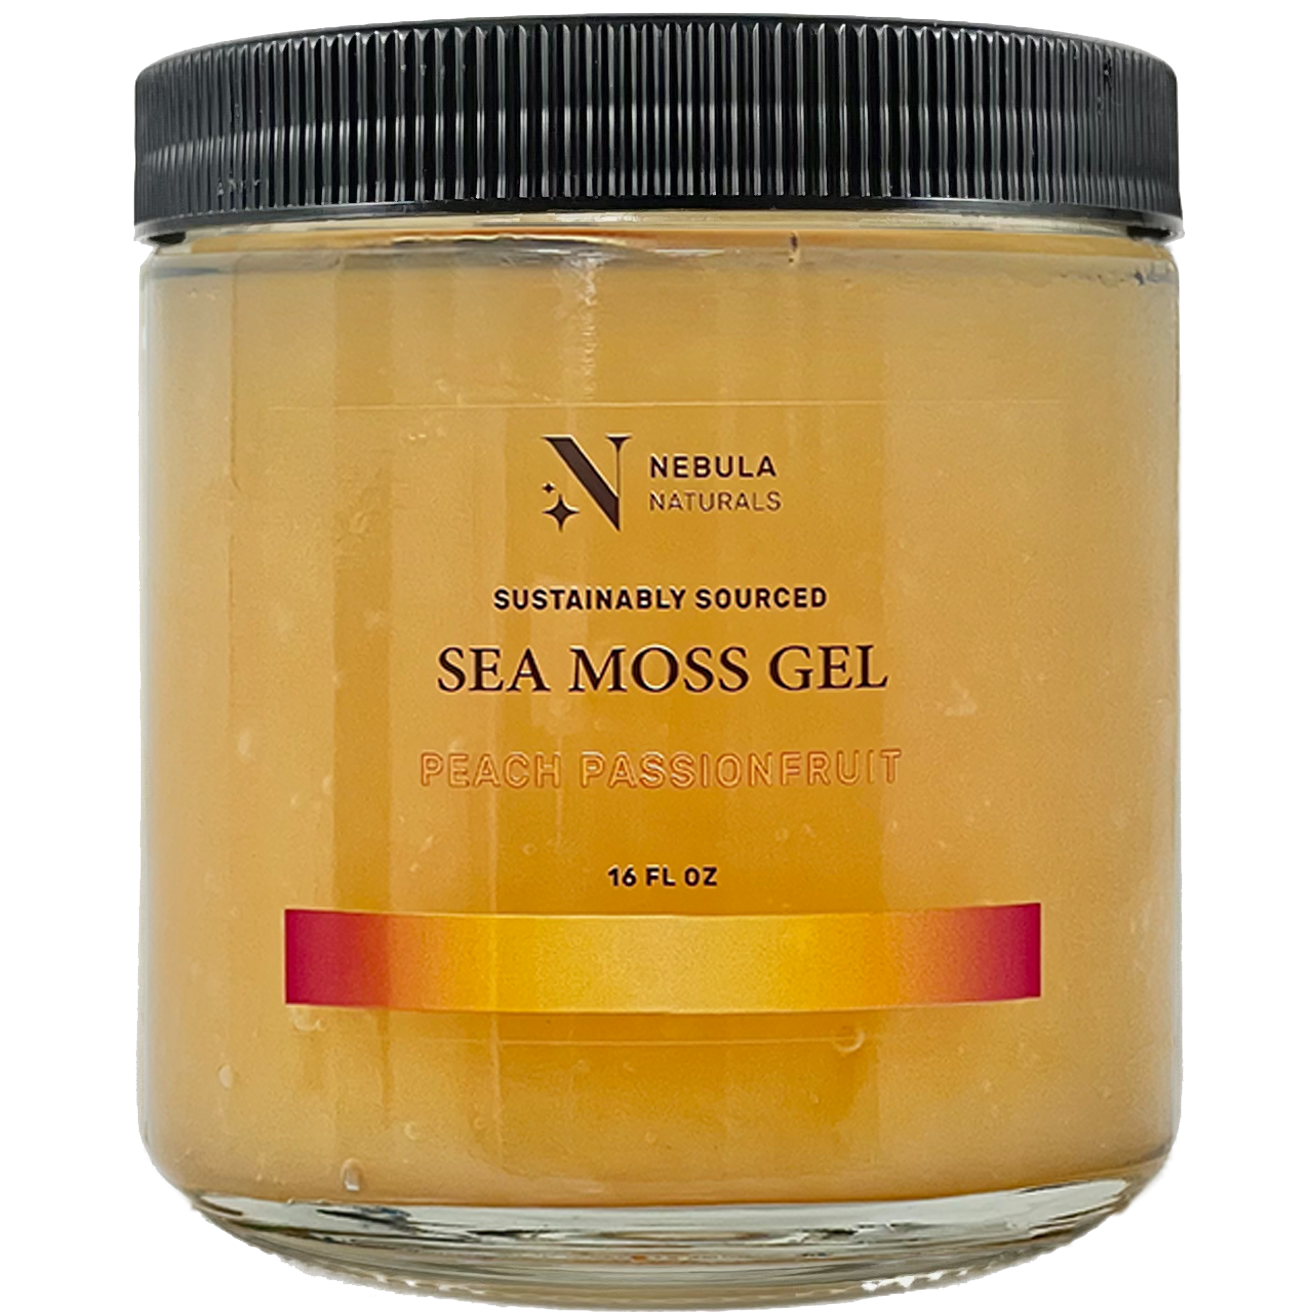 Peach Passionfruit Sea Moss Gel